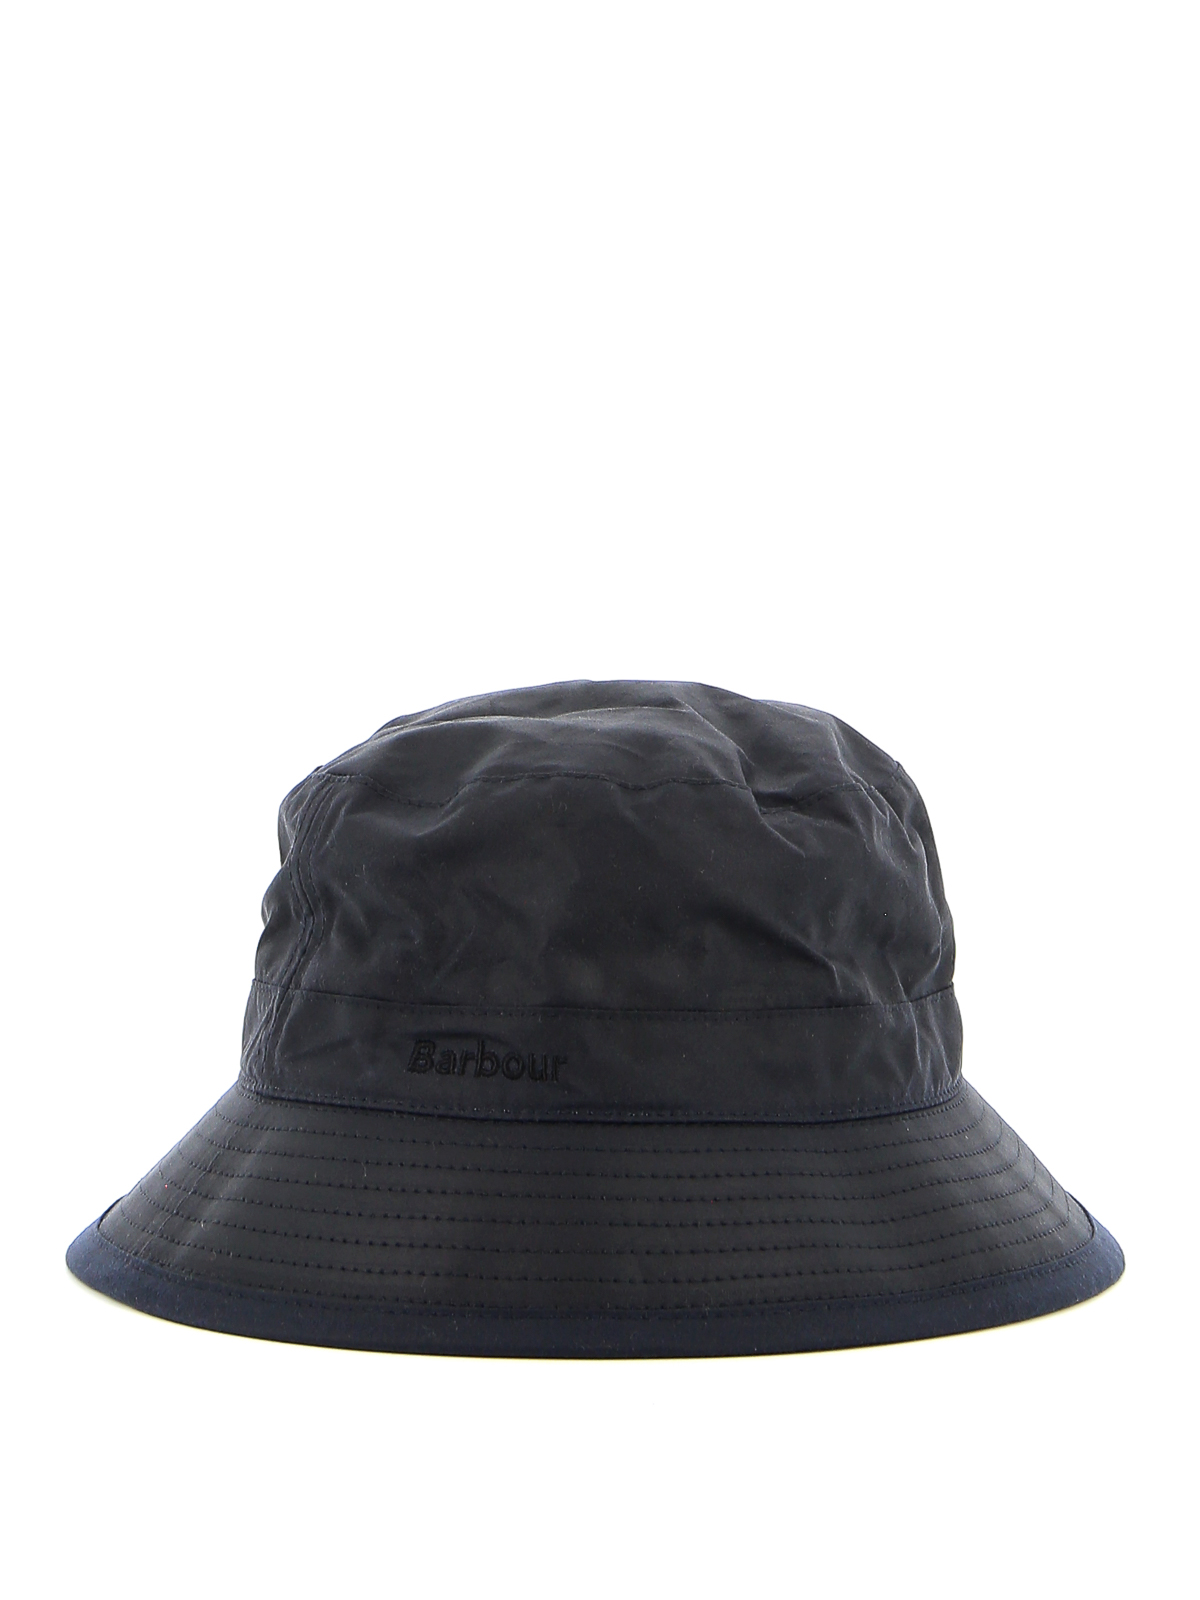 Barbour Wax Sport Fisherman Hat In Dark Blue